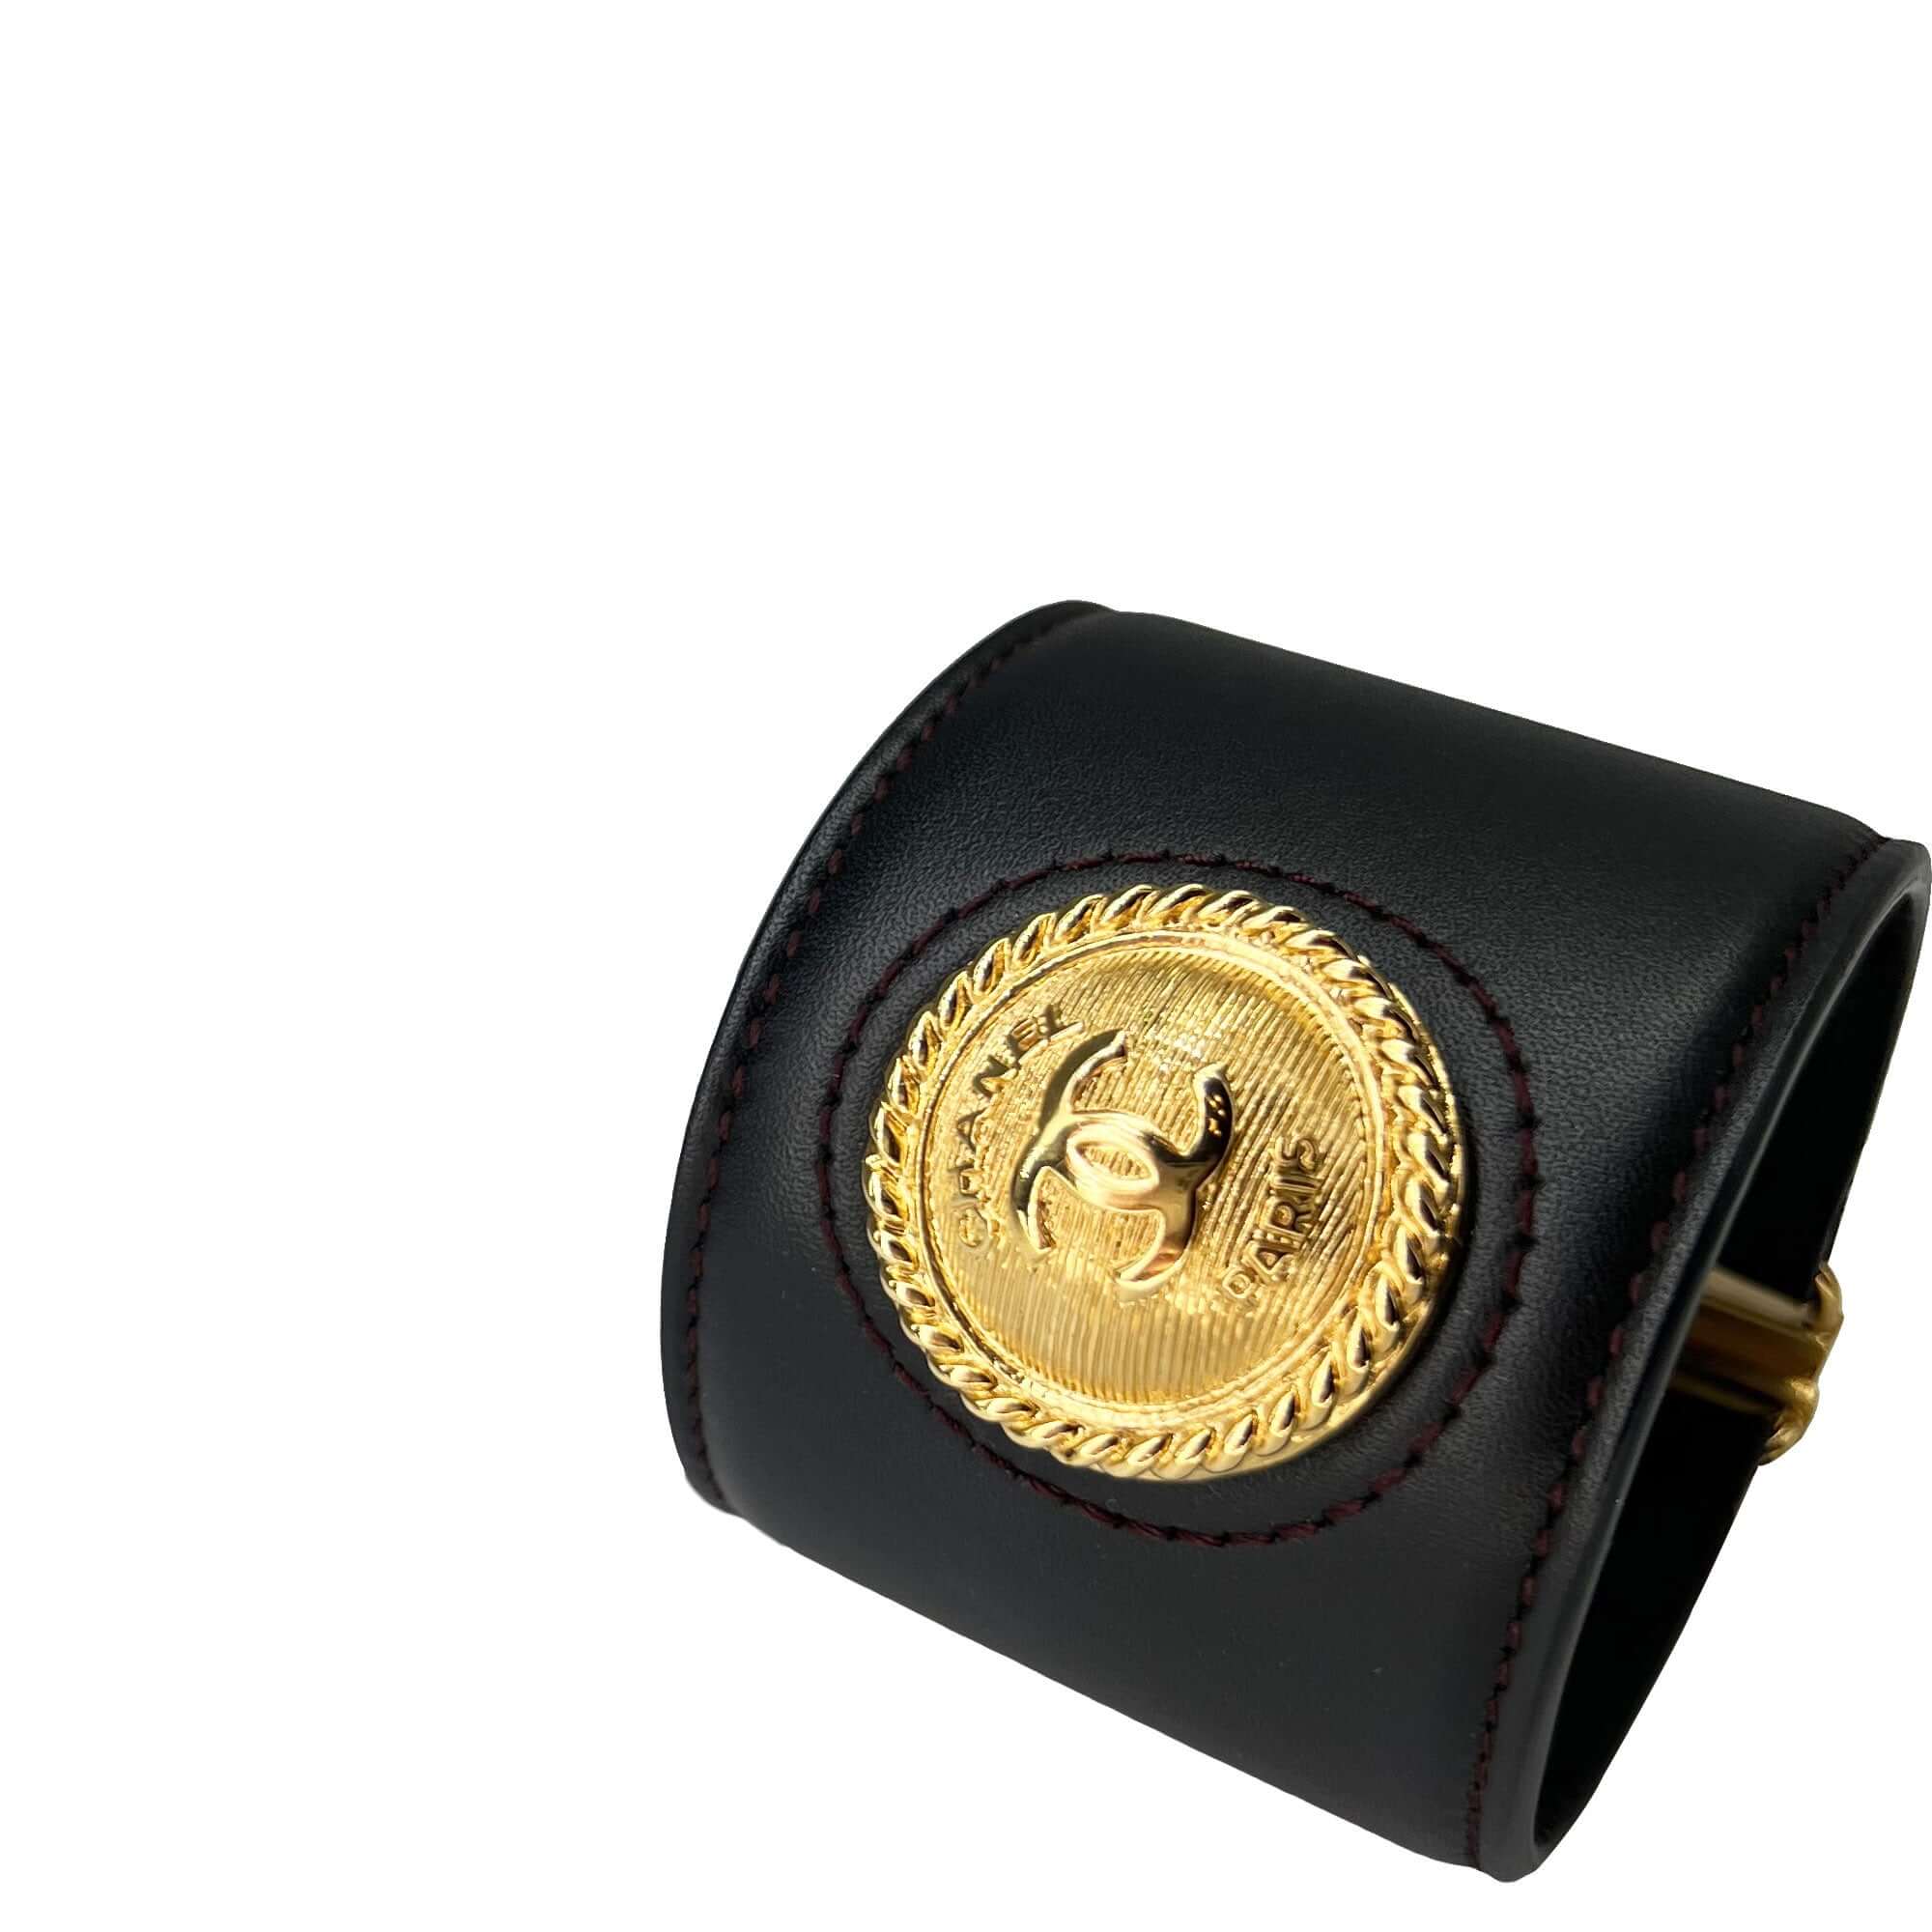 Chanel leather gold embellishment cuff bracelet